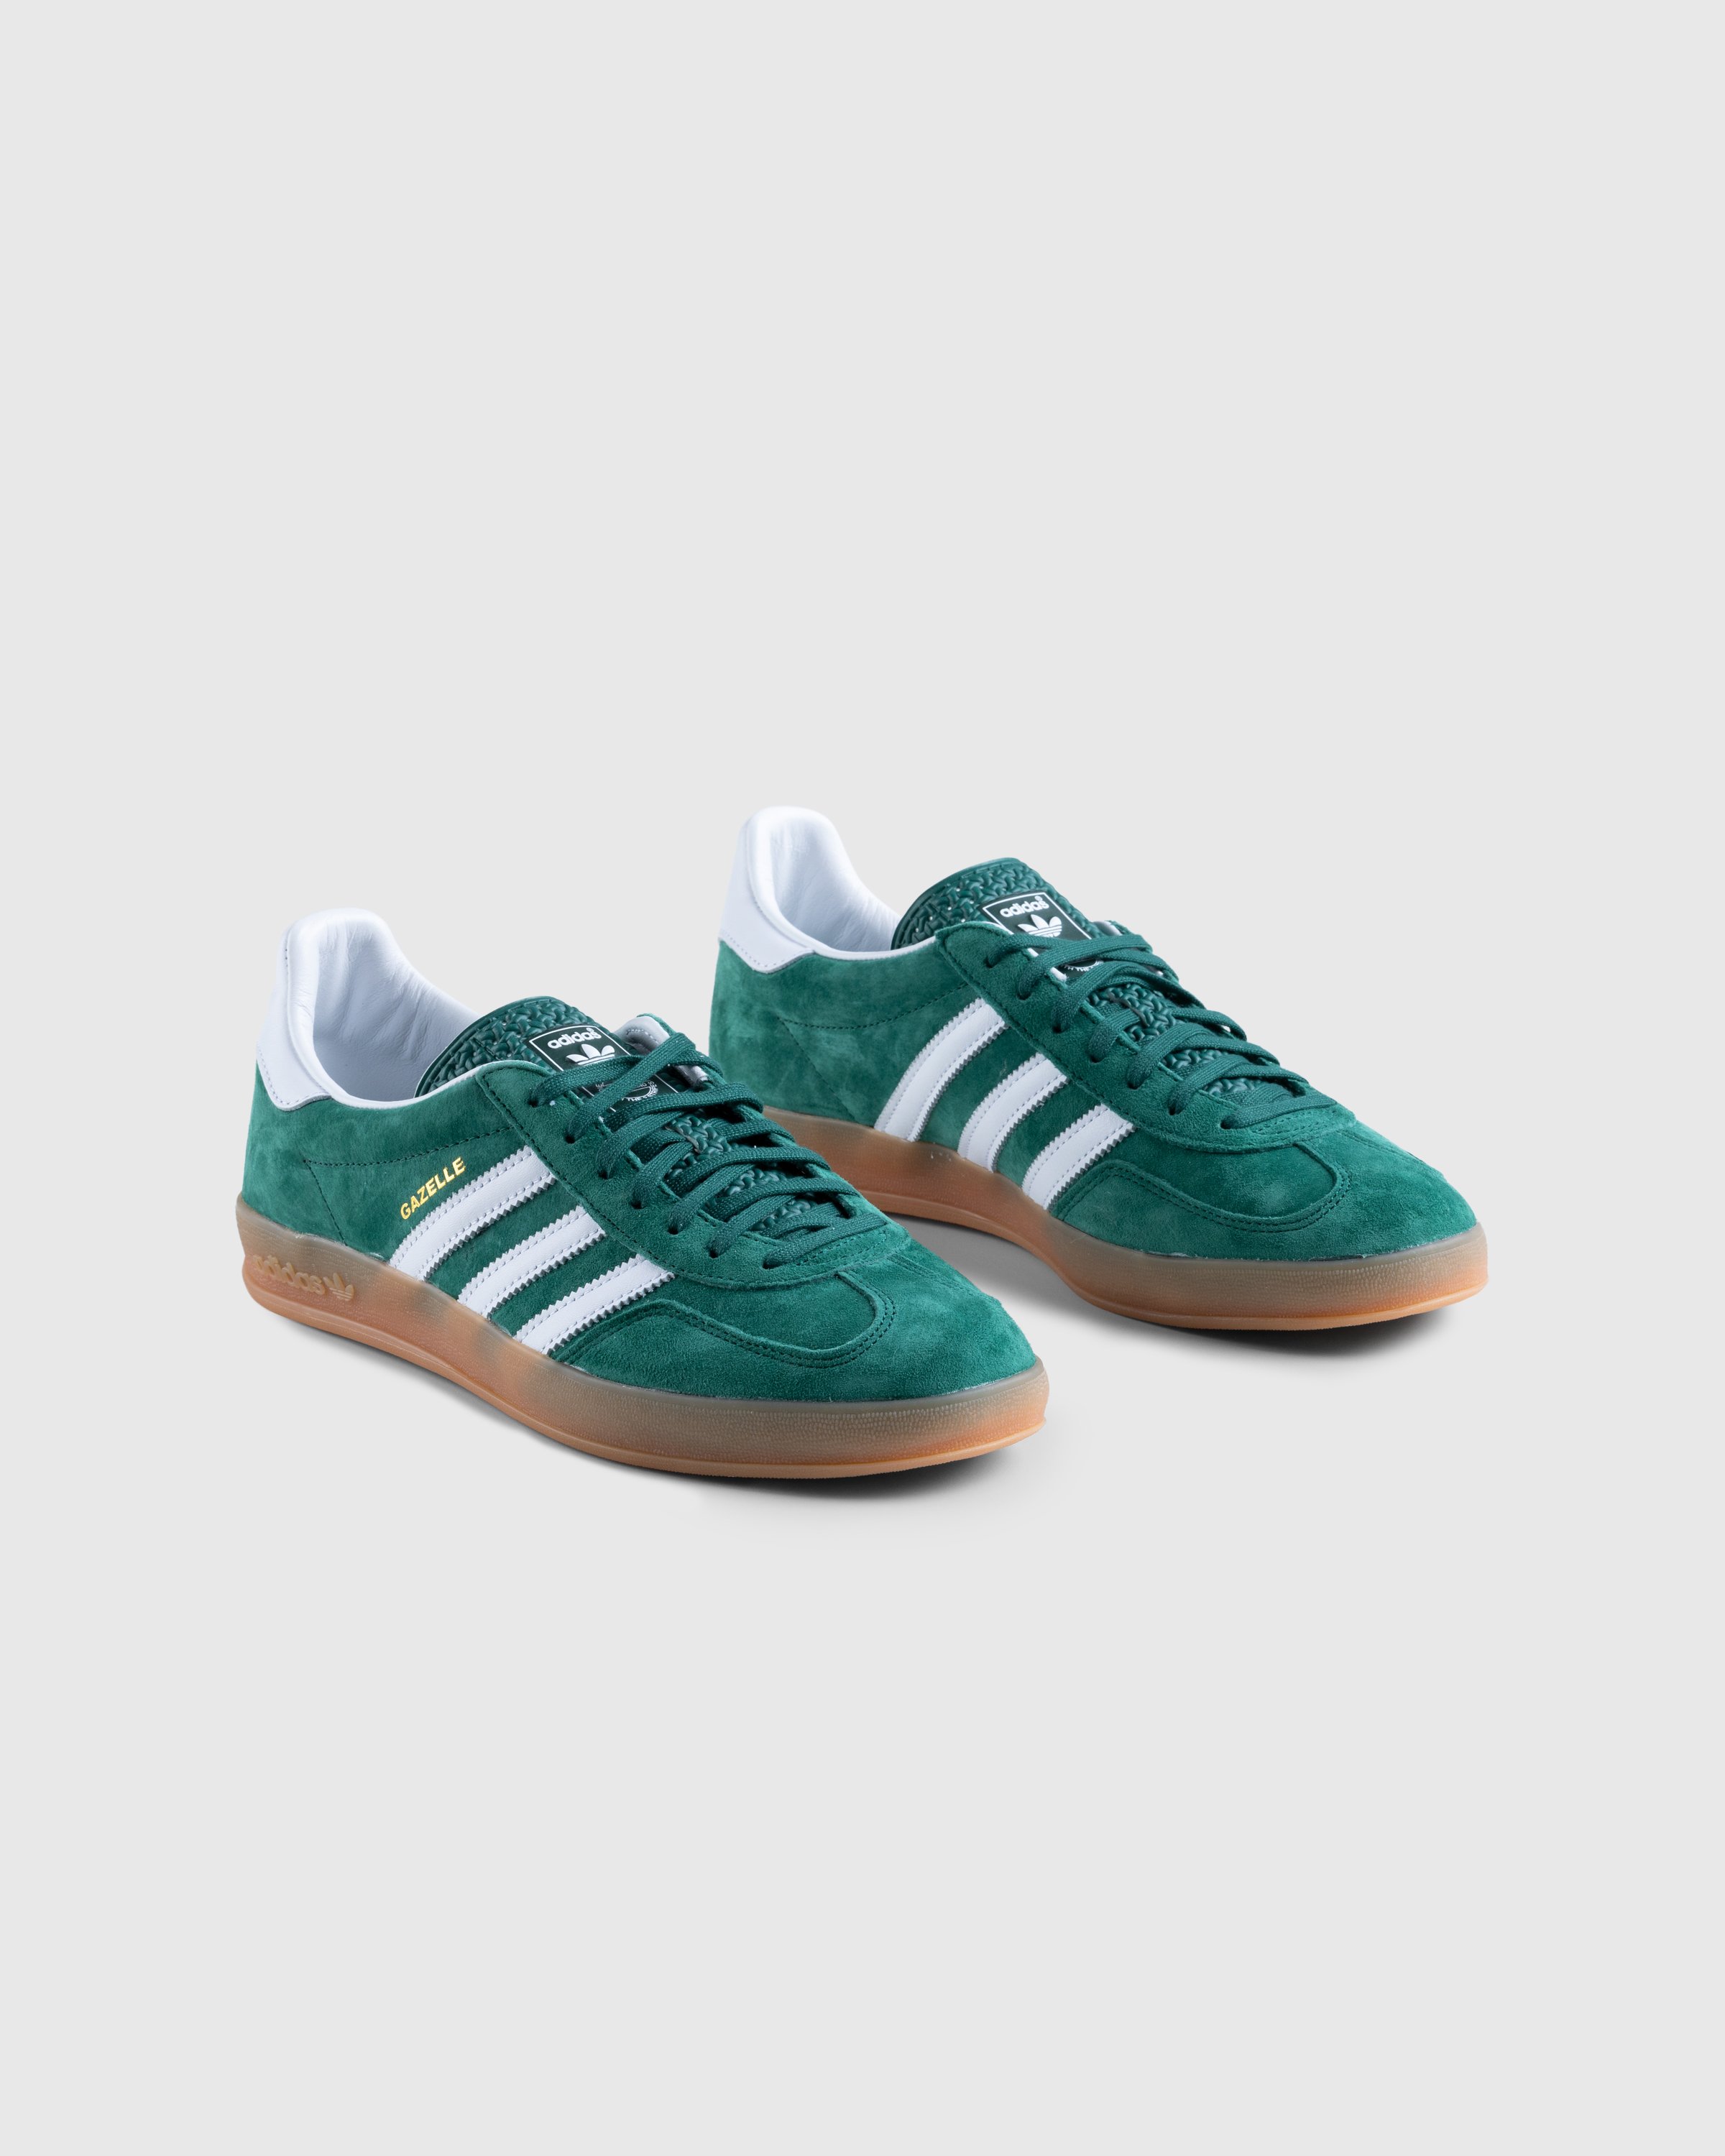 Adidas - Gazelle Indoor Collegiate Green - Footwear - Green - Image 3